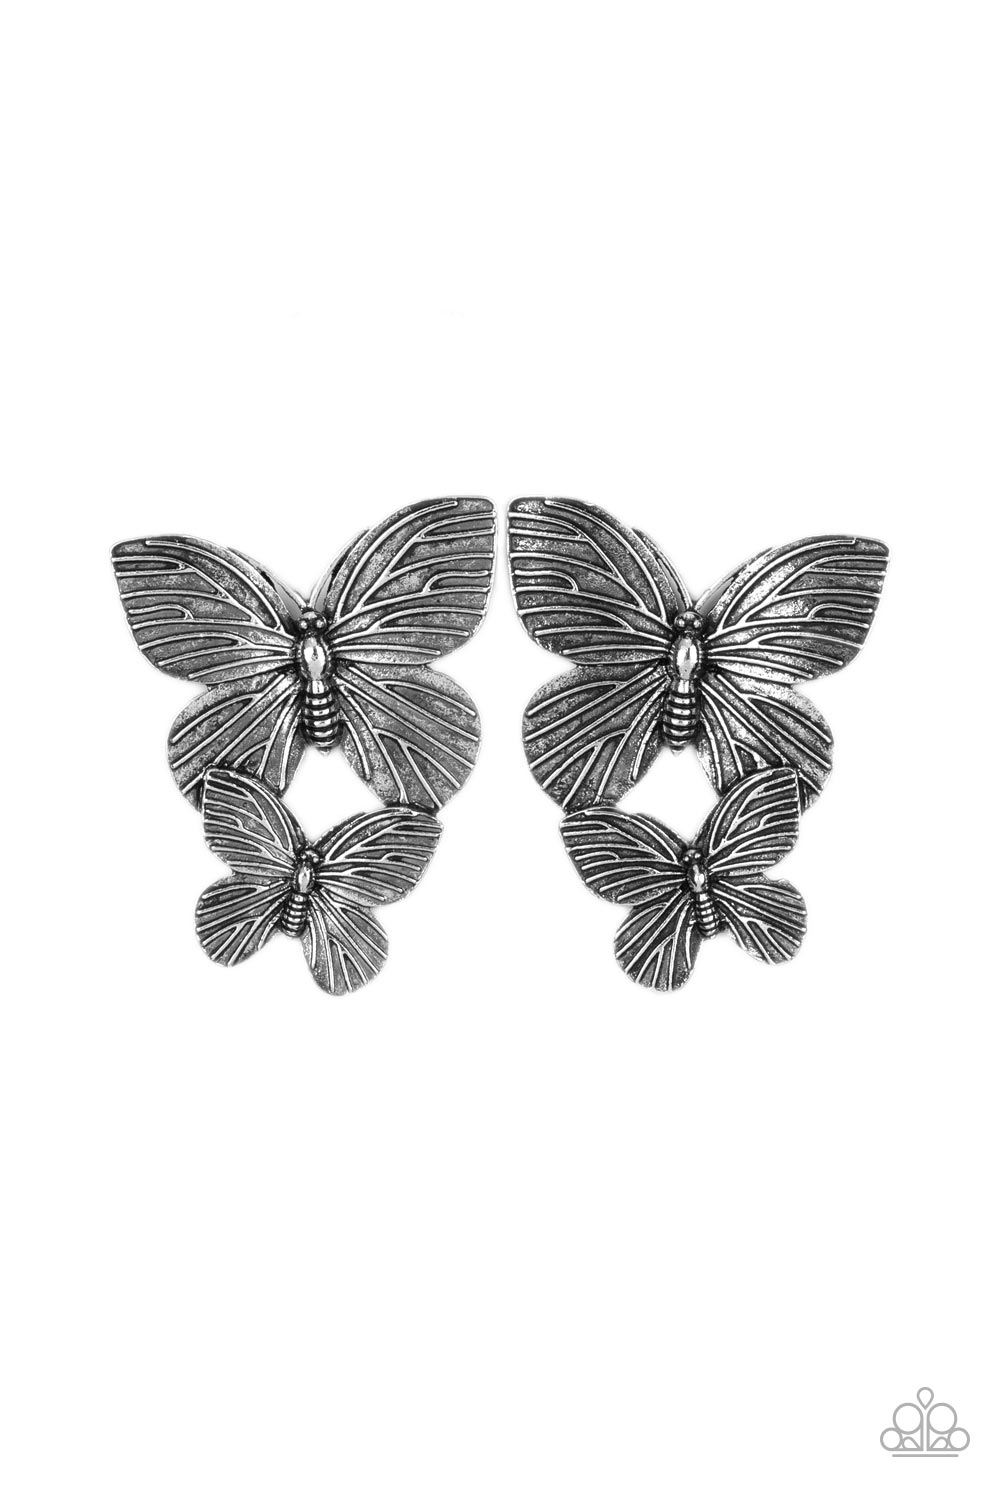 blushing-butterflies-silver-p5po-svxx-223xx